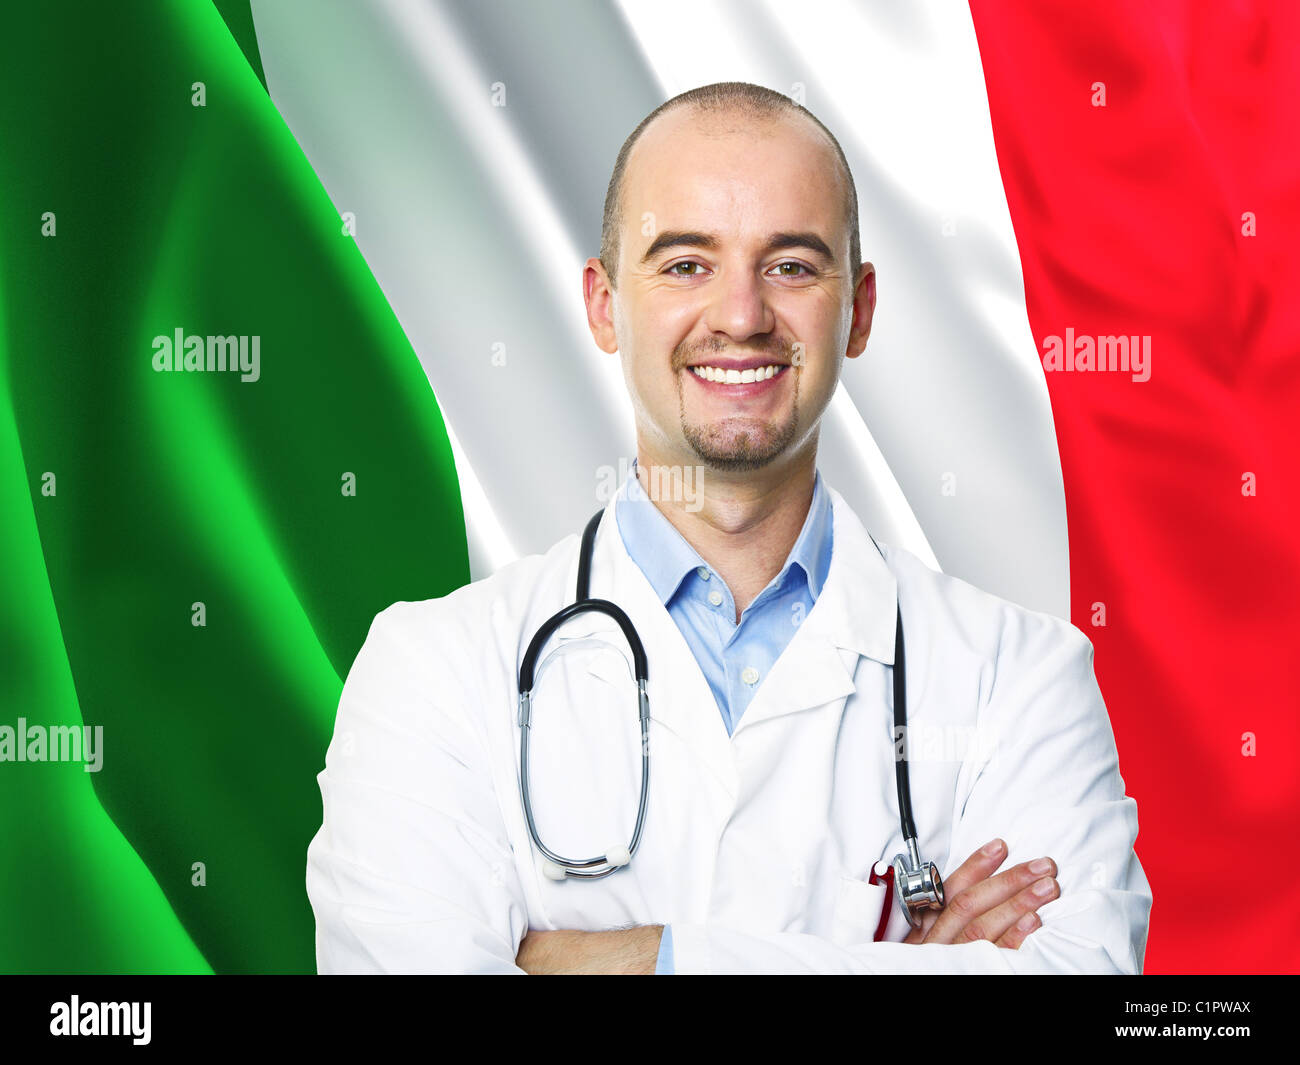 smiling caucasian man and italian flag background Stock Photo